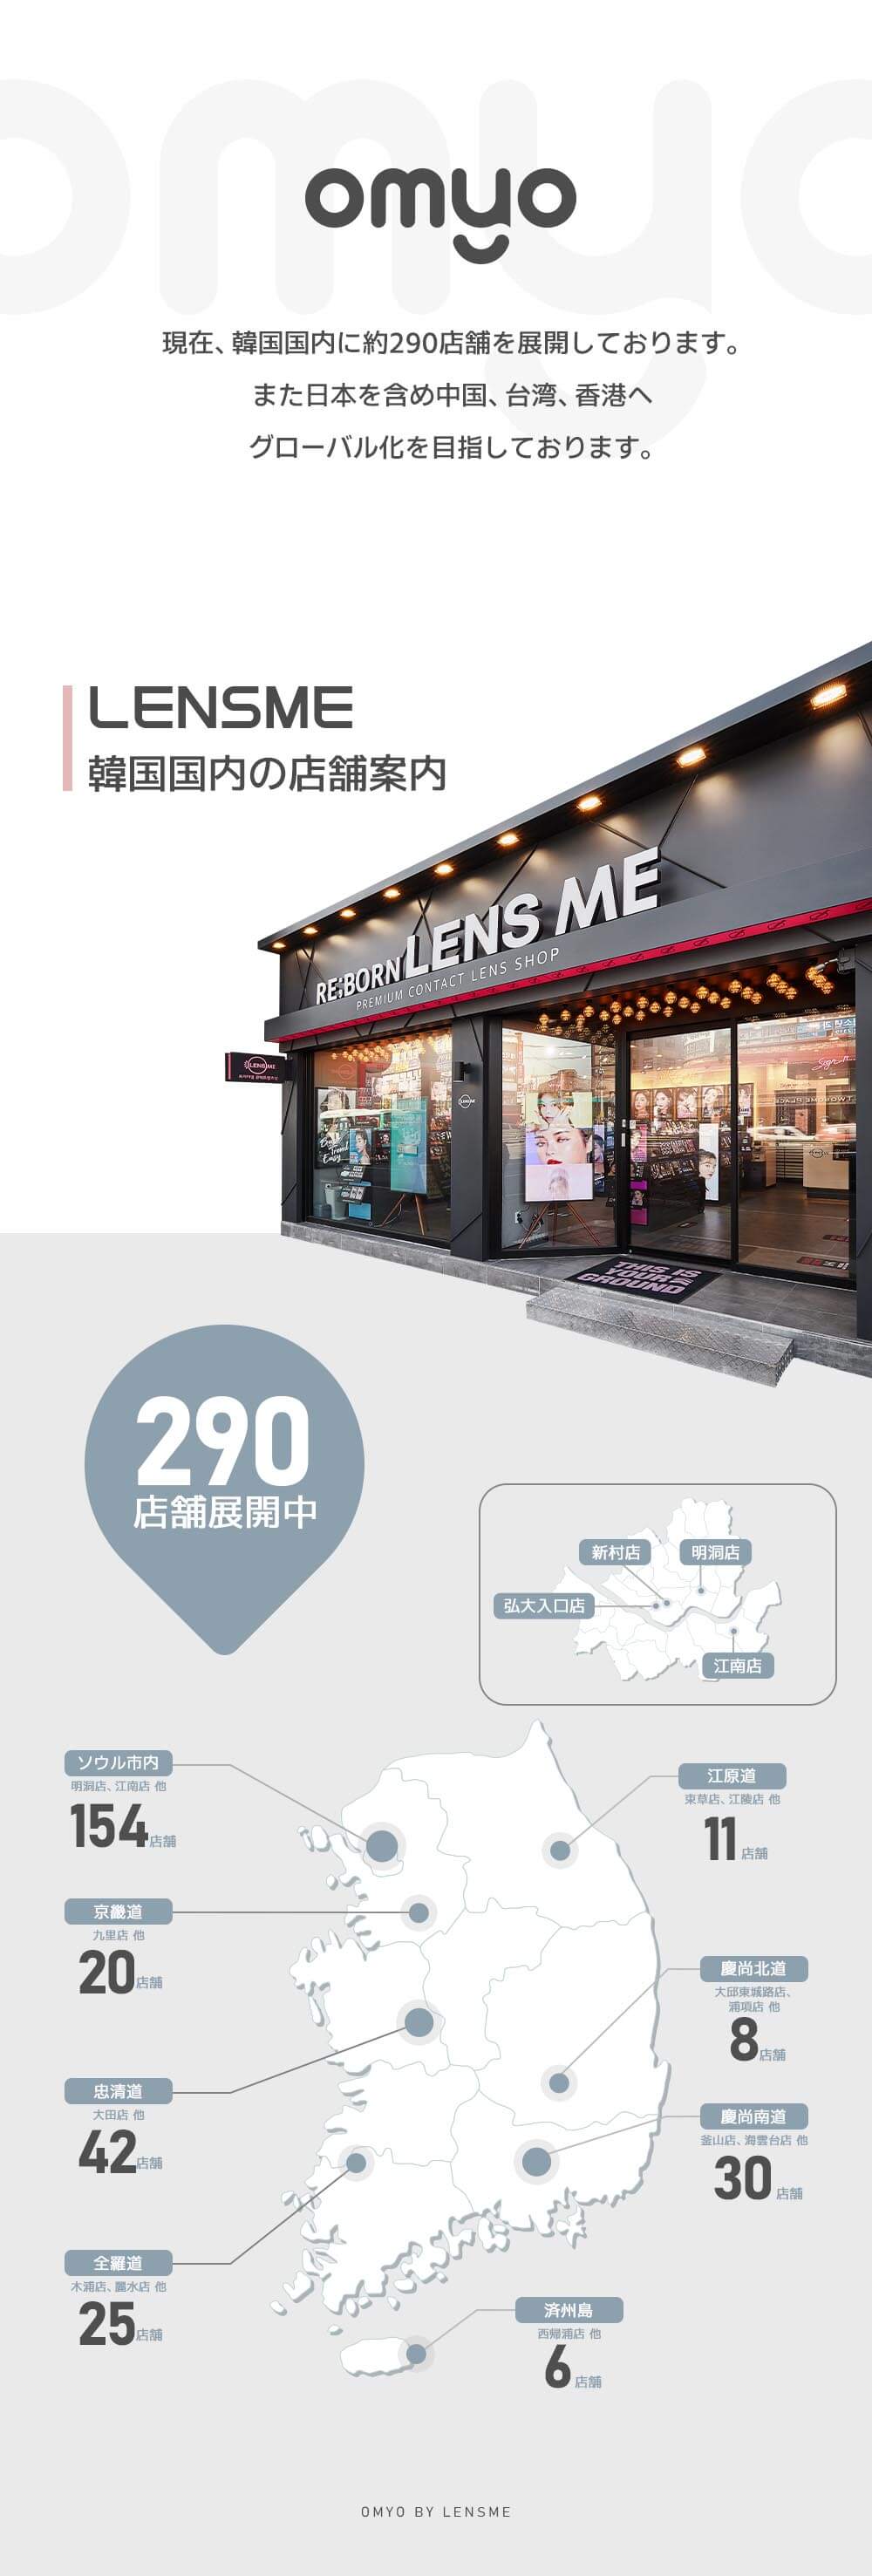 LENSMEに新しく仲間入りしたモデルJU YOUNG(ジュヨン)イメージモデルの「オ・マイ・オ（omyo）」は韓国で290店舗も展開される人気ブランドLENSME